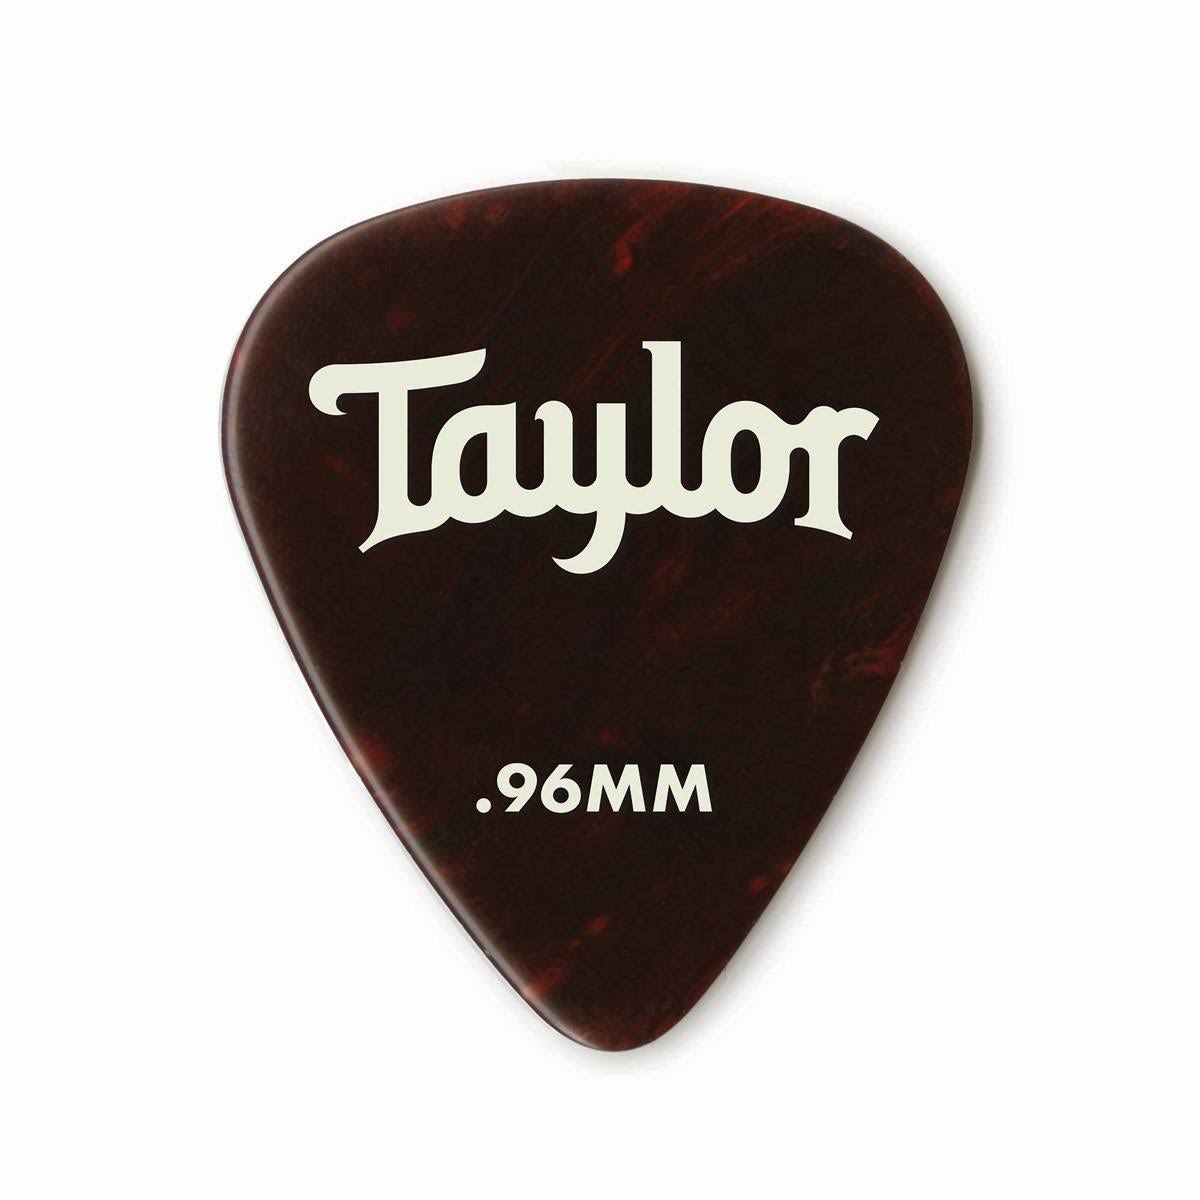 Taylor Celluloid 351 Guitar Picks - Tortoise Shell, .96mm, x12